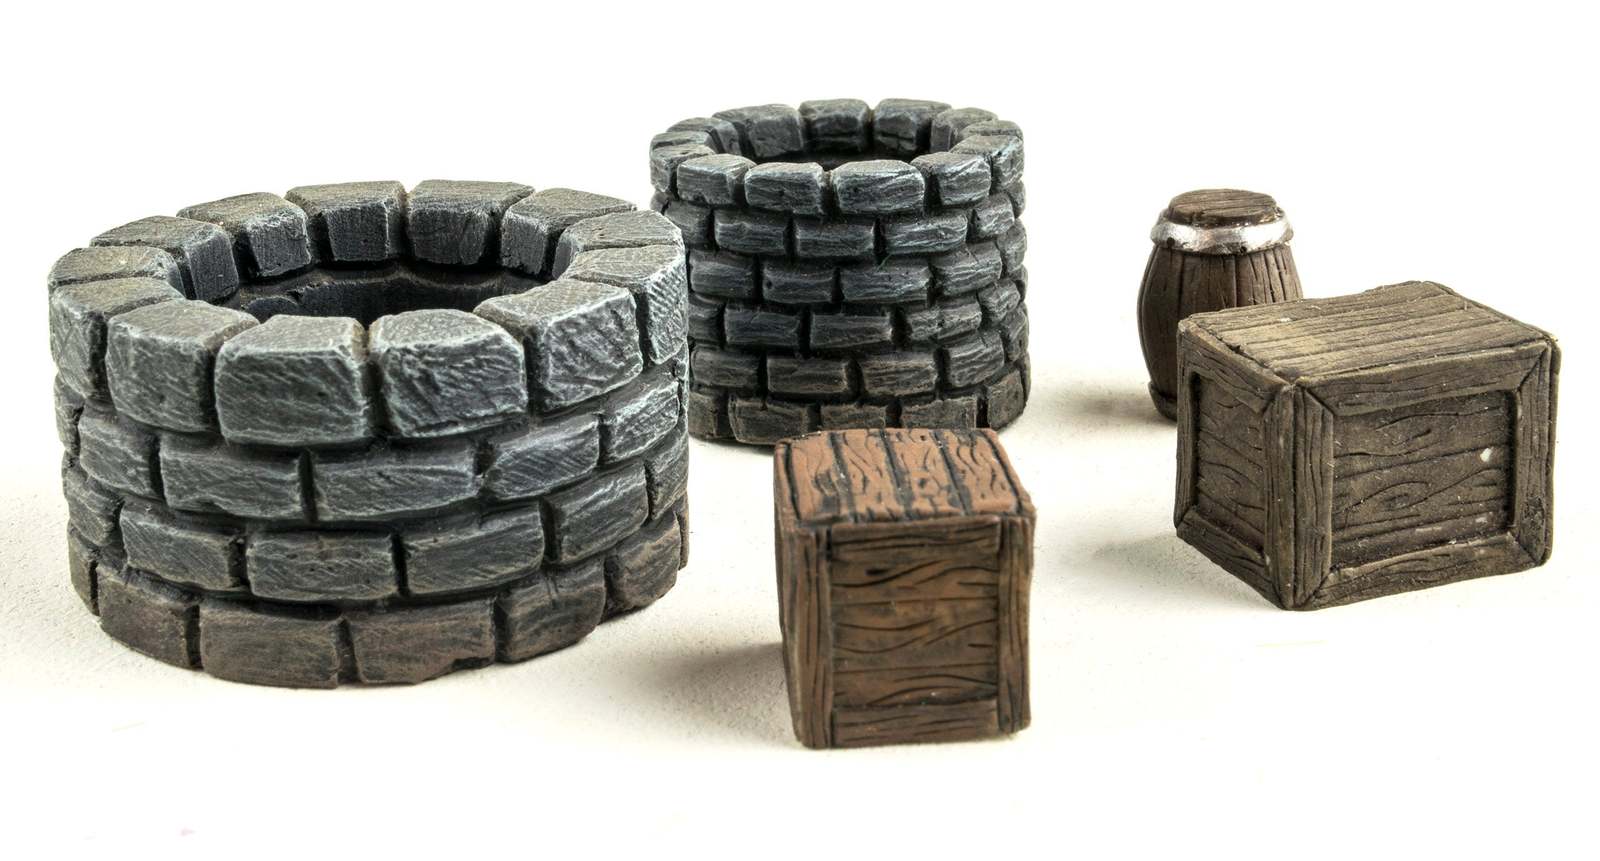 WWG Fantasy Village Set of Wells, Crates & Barrels – Medieval Wargaming Terrain